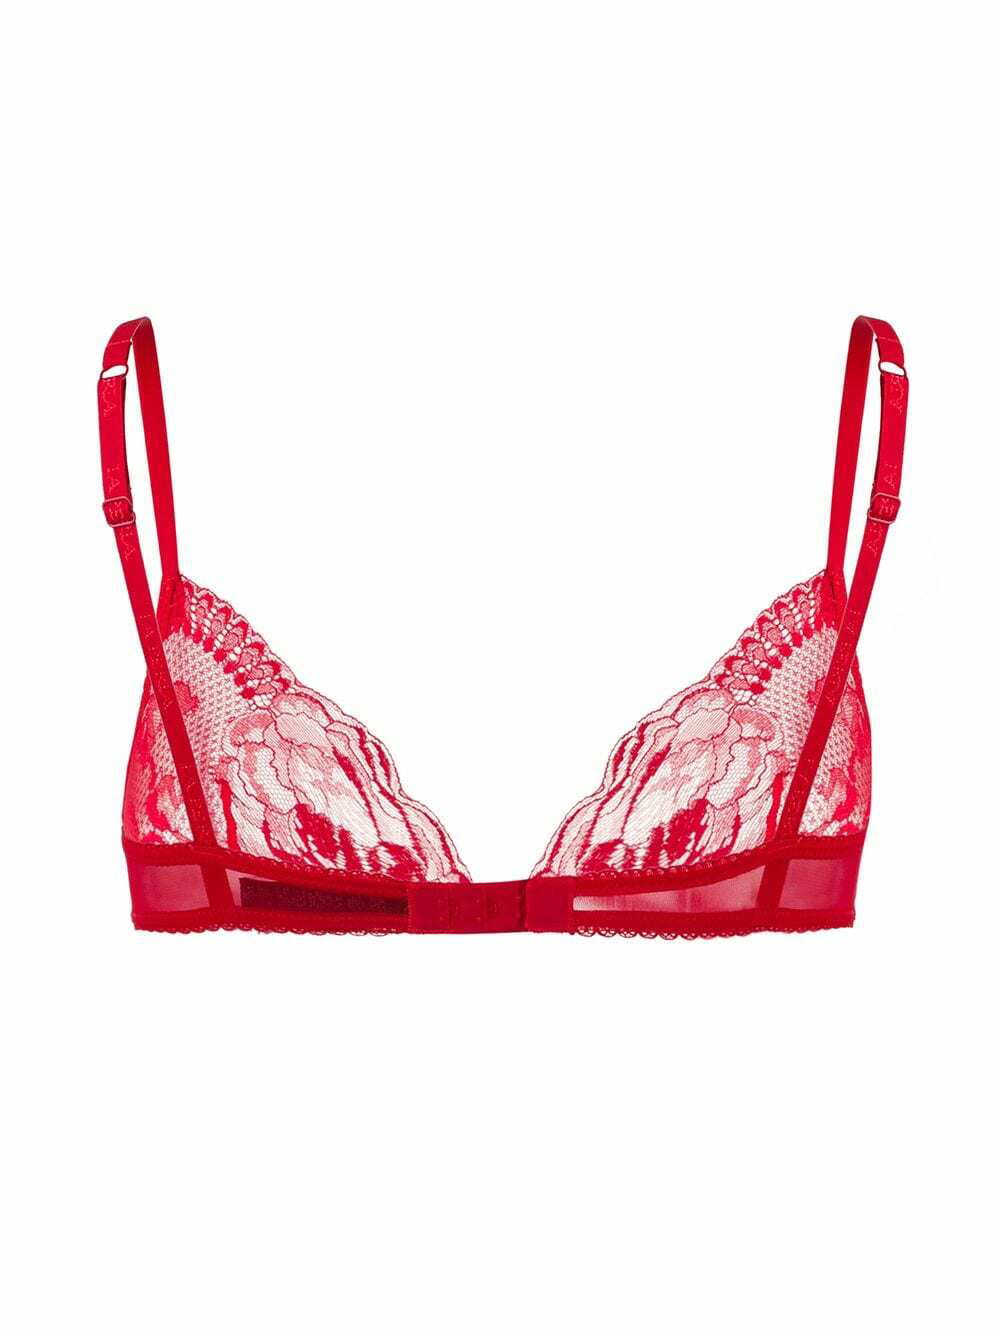 Red lace push-up bra - La Perla - Global